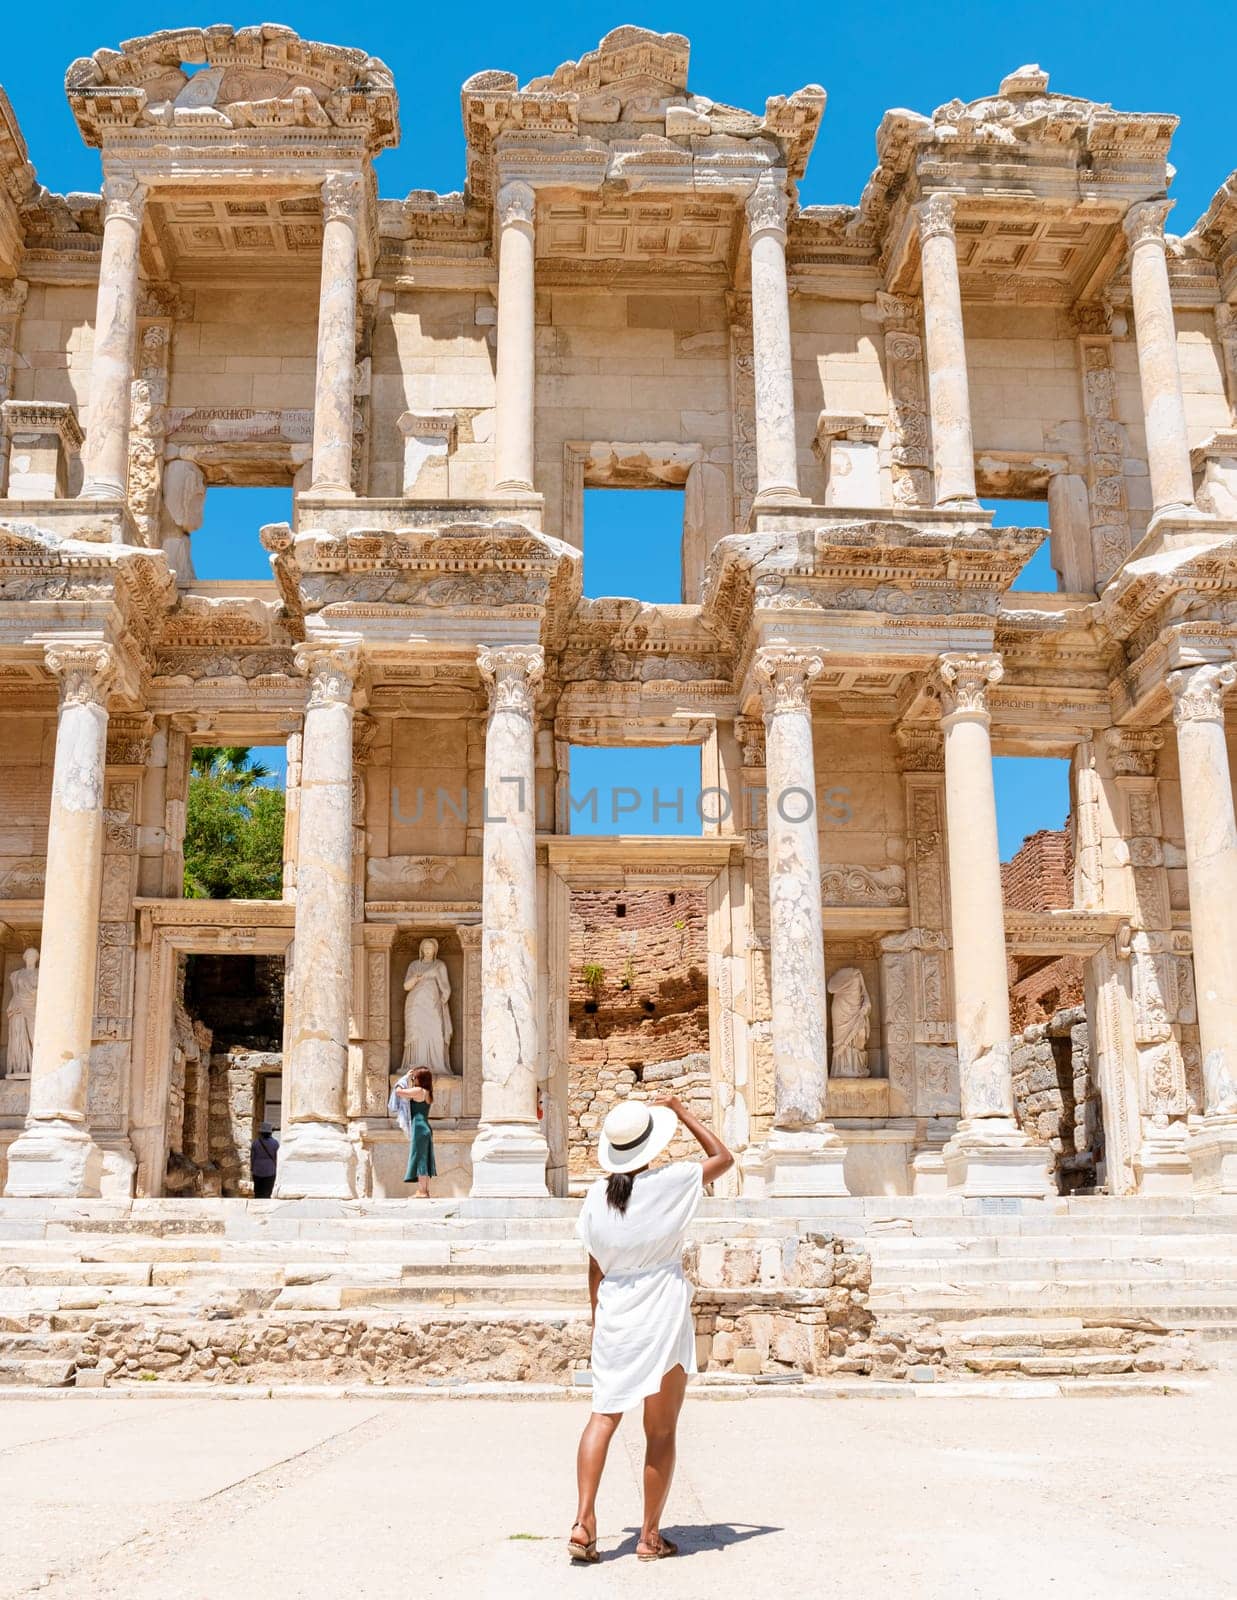 Ephesus ruins, Turkey, beautiful sunny day between the ruins of Ephesus Turkey. Asian women with a hat visit Ephesus Unesco heritage